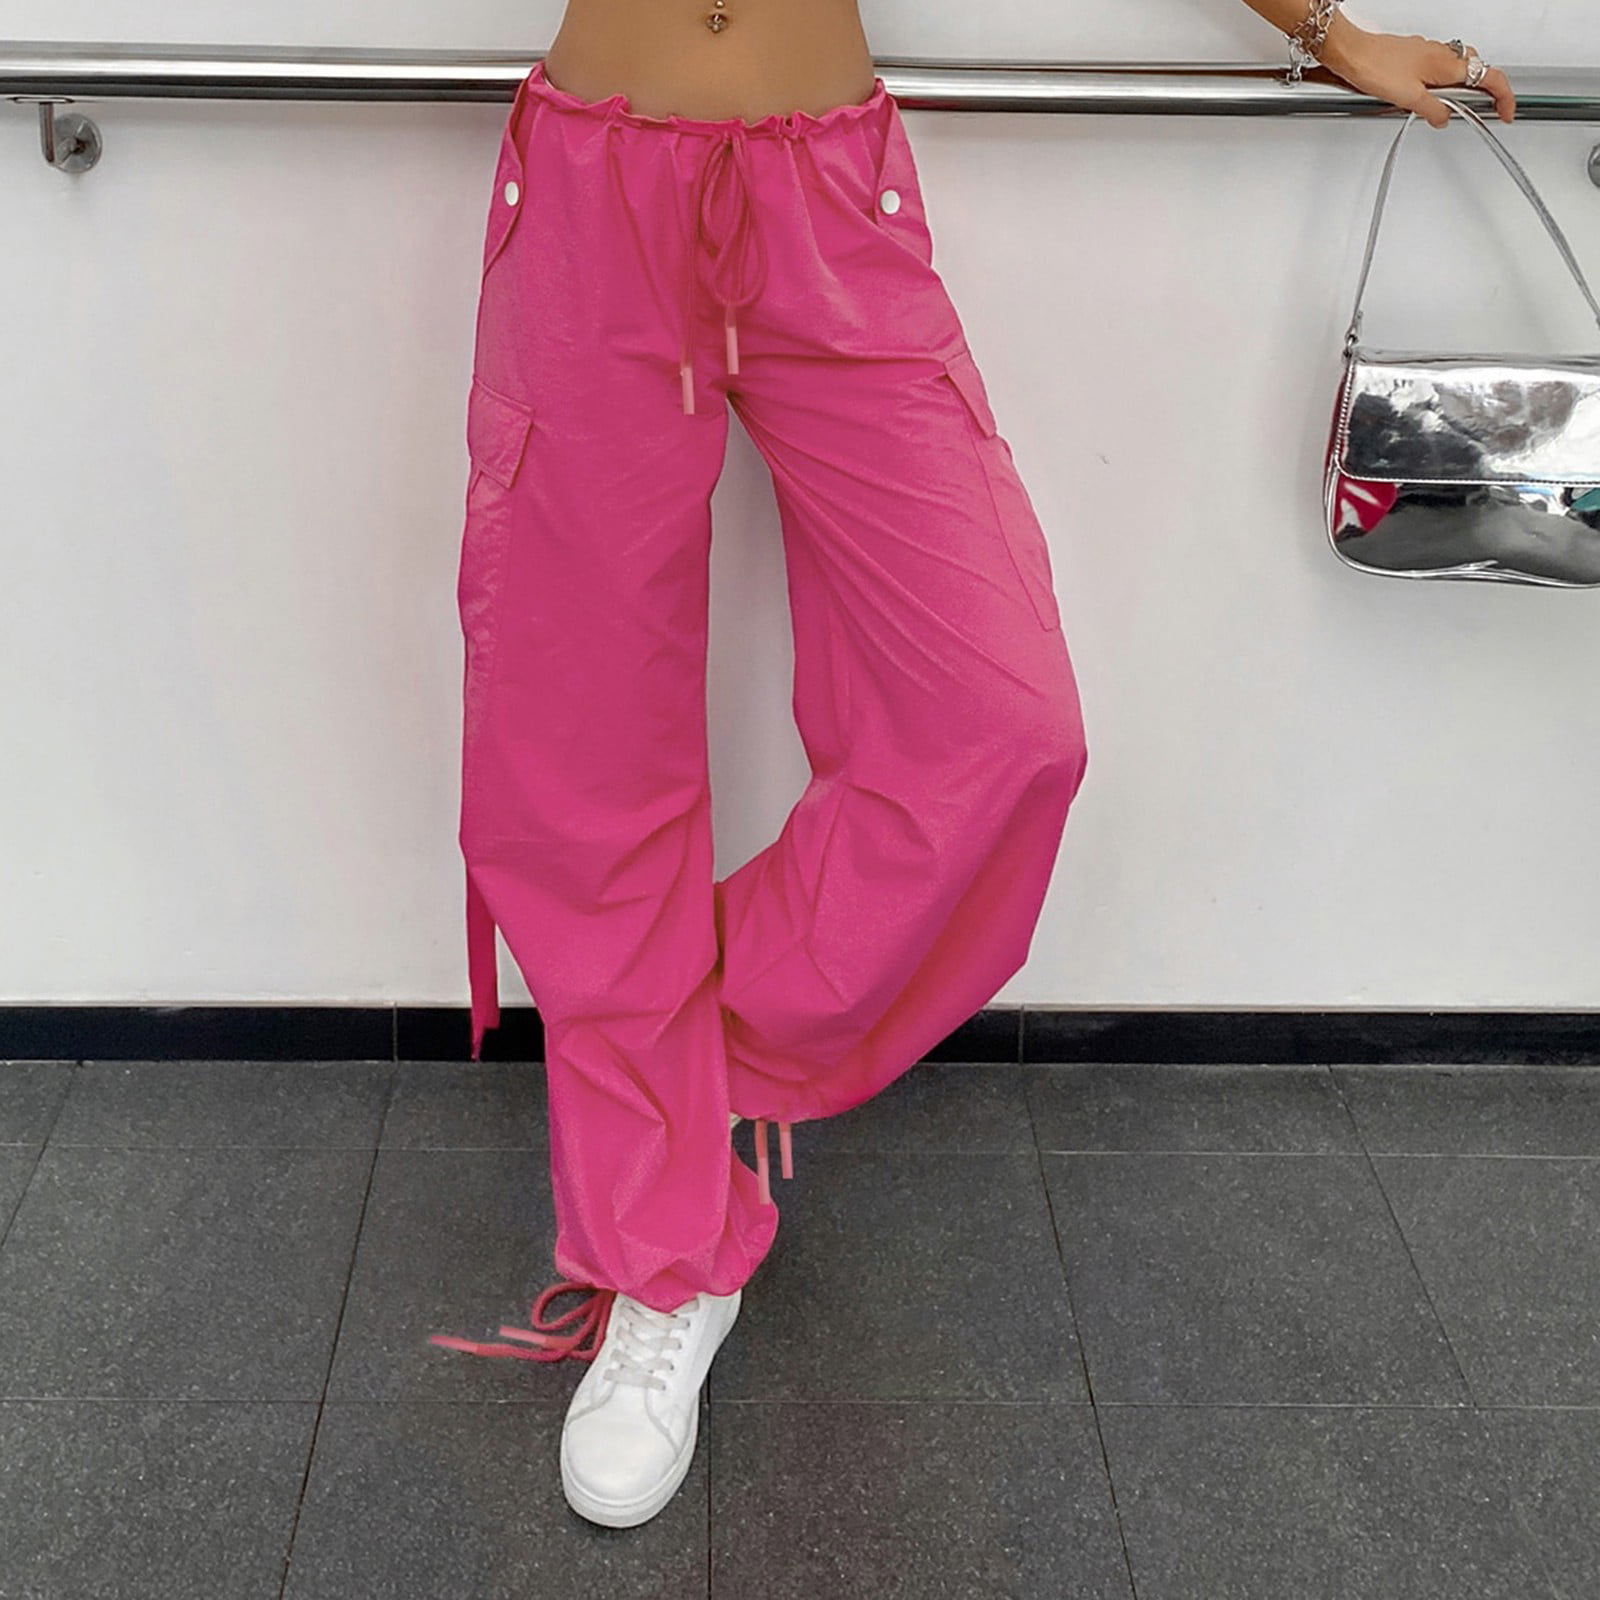 Jaquard Knickers Pink Womens Clothes Ankara Shorts Women Cargo